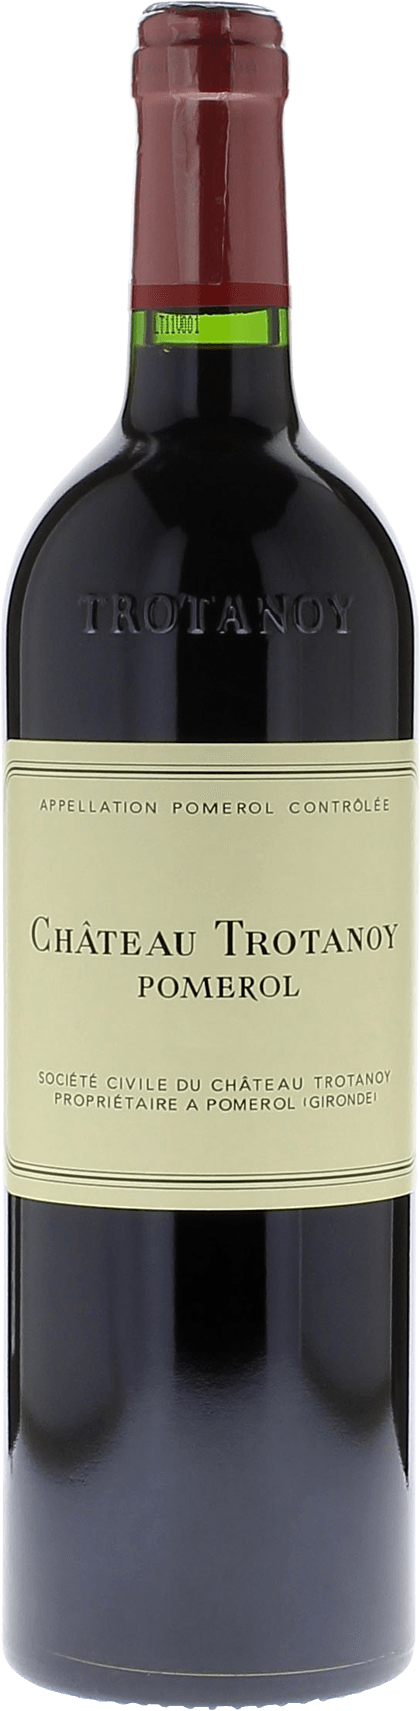 Trotanoy 1988  Pomerol, Bordeaux rouge